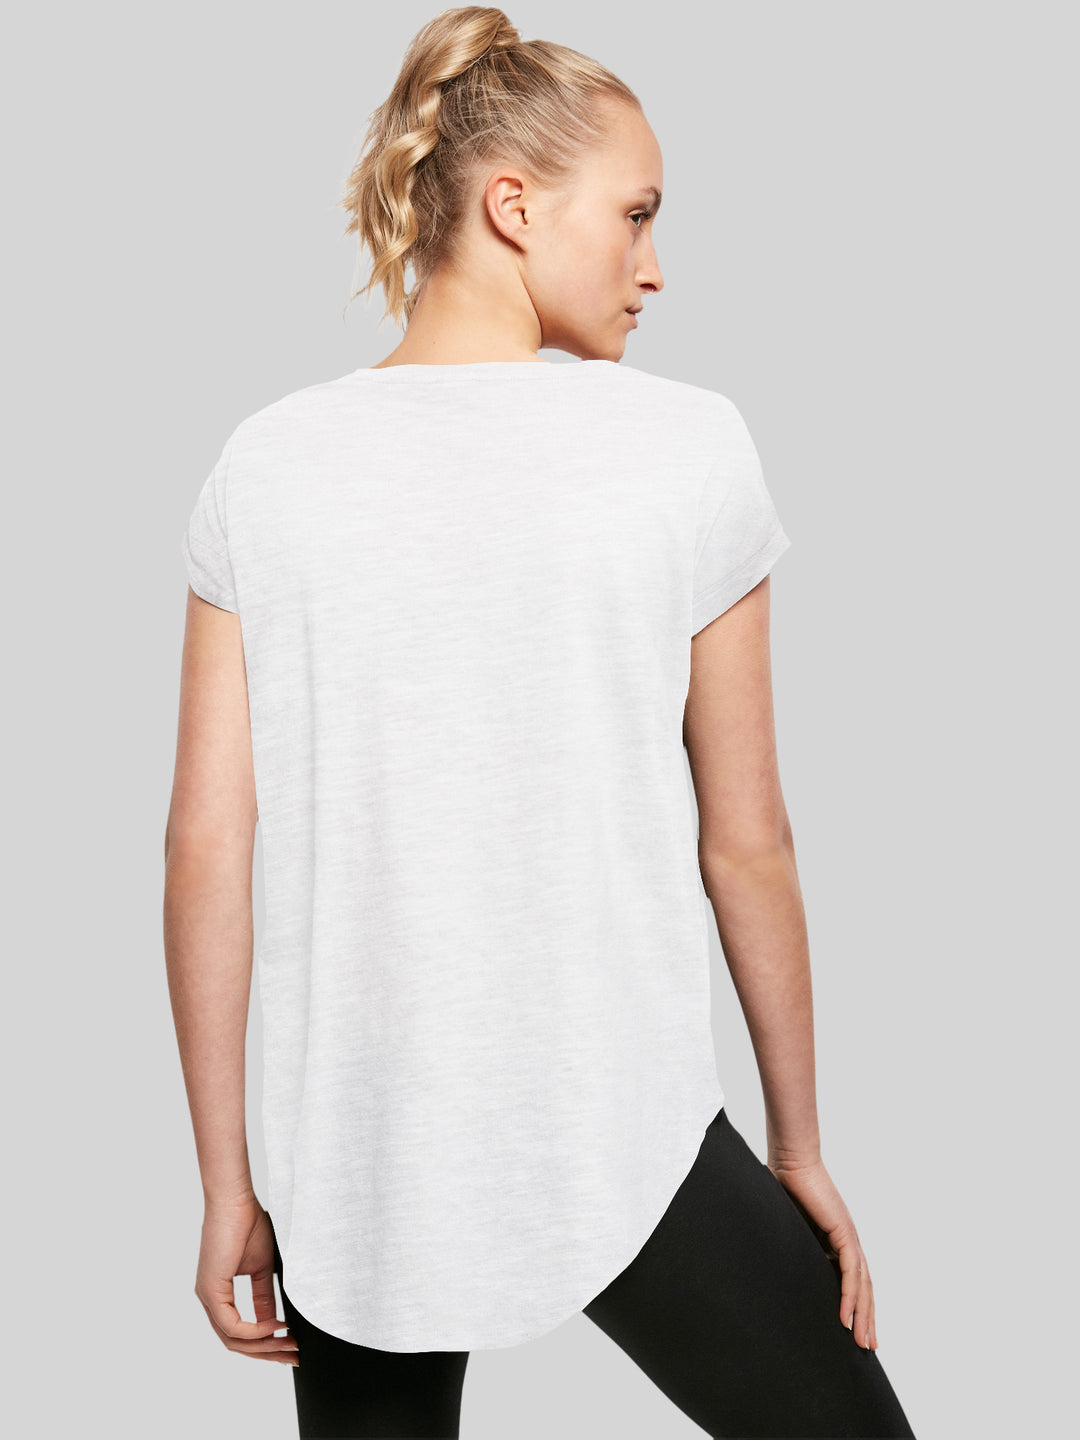 ACDC T-Shirt | Back In Black Logo | Premium Long Damen T Shirt